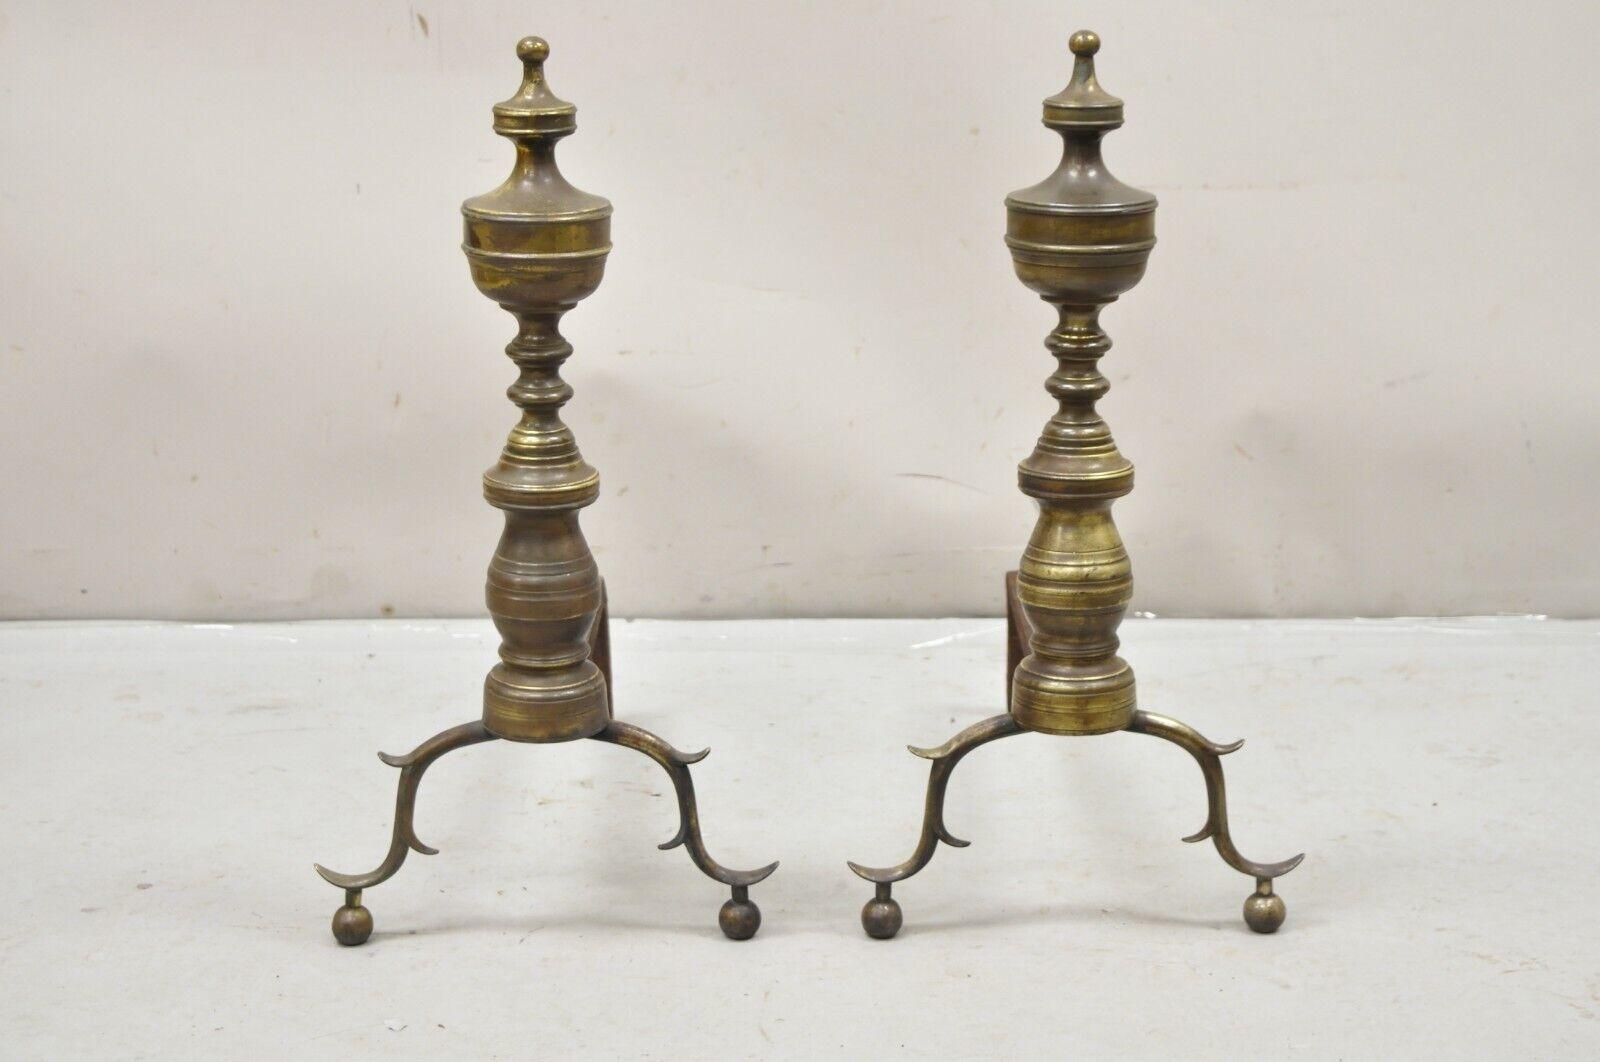 Antique Brass Federal Branch Leg Urn Finial Cast Iron Andirons - a Pair. Circa 19th Century. Measurements: 24